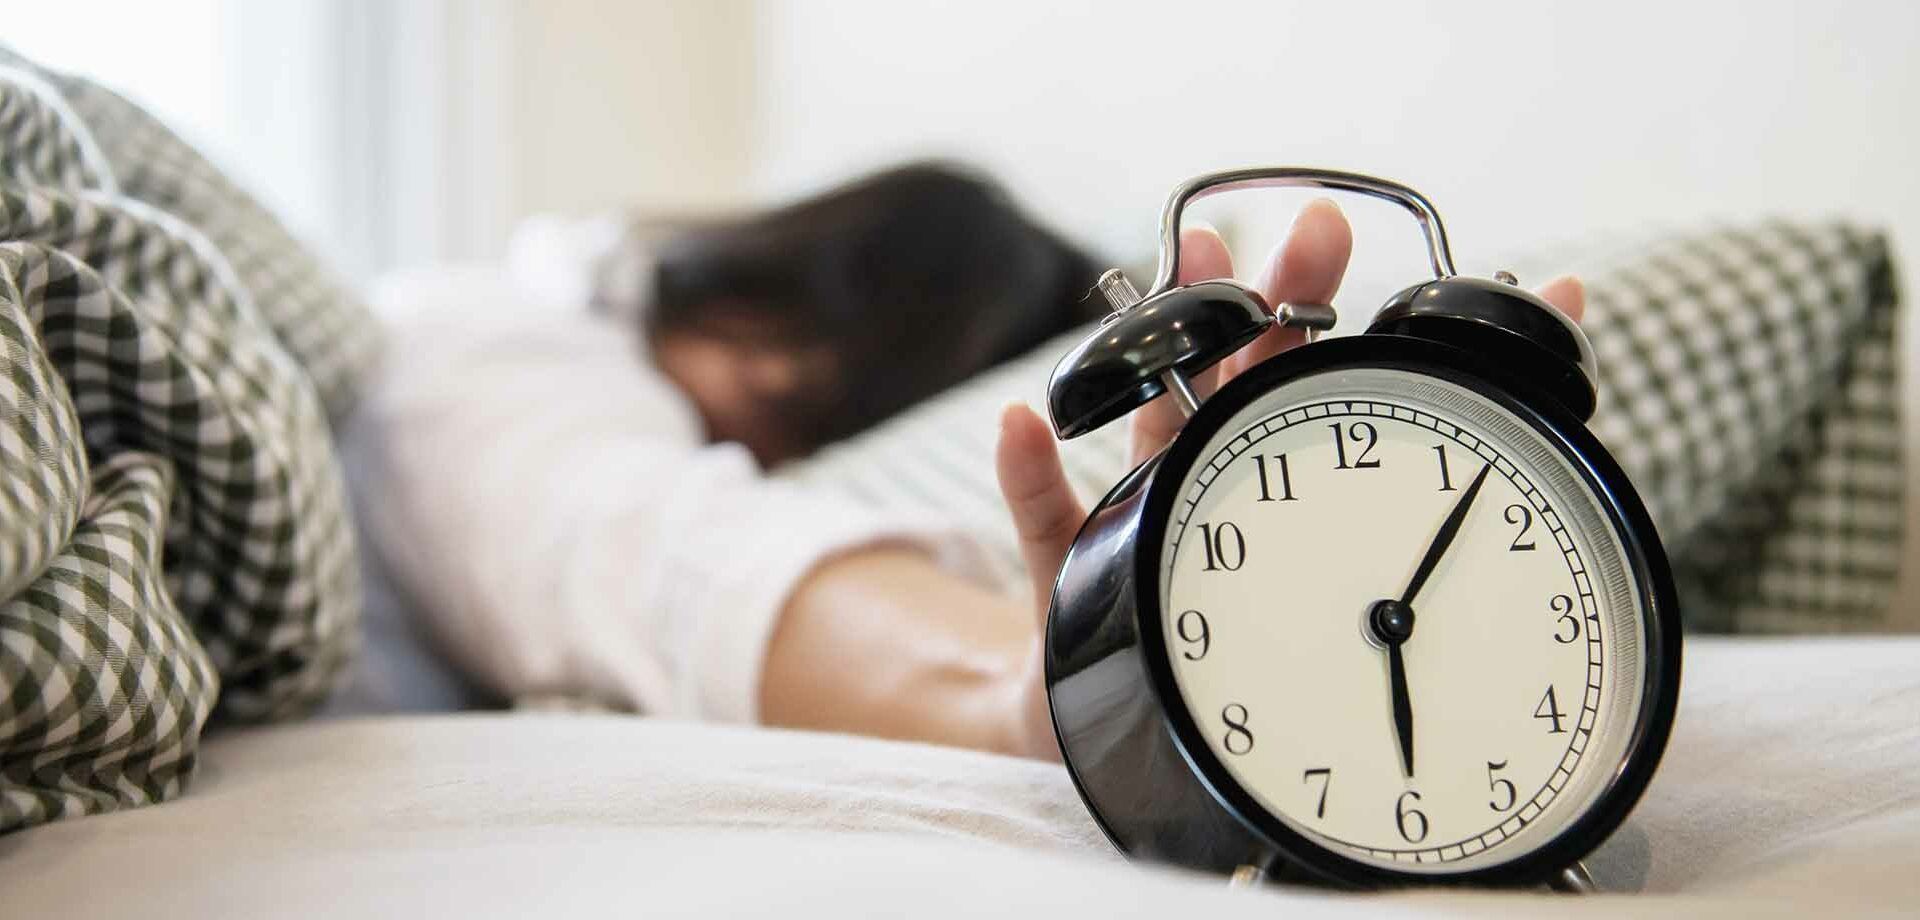 4 tips to optimize your sleep